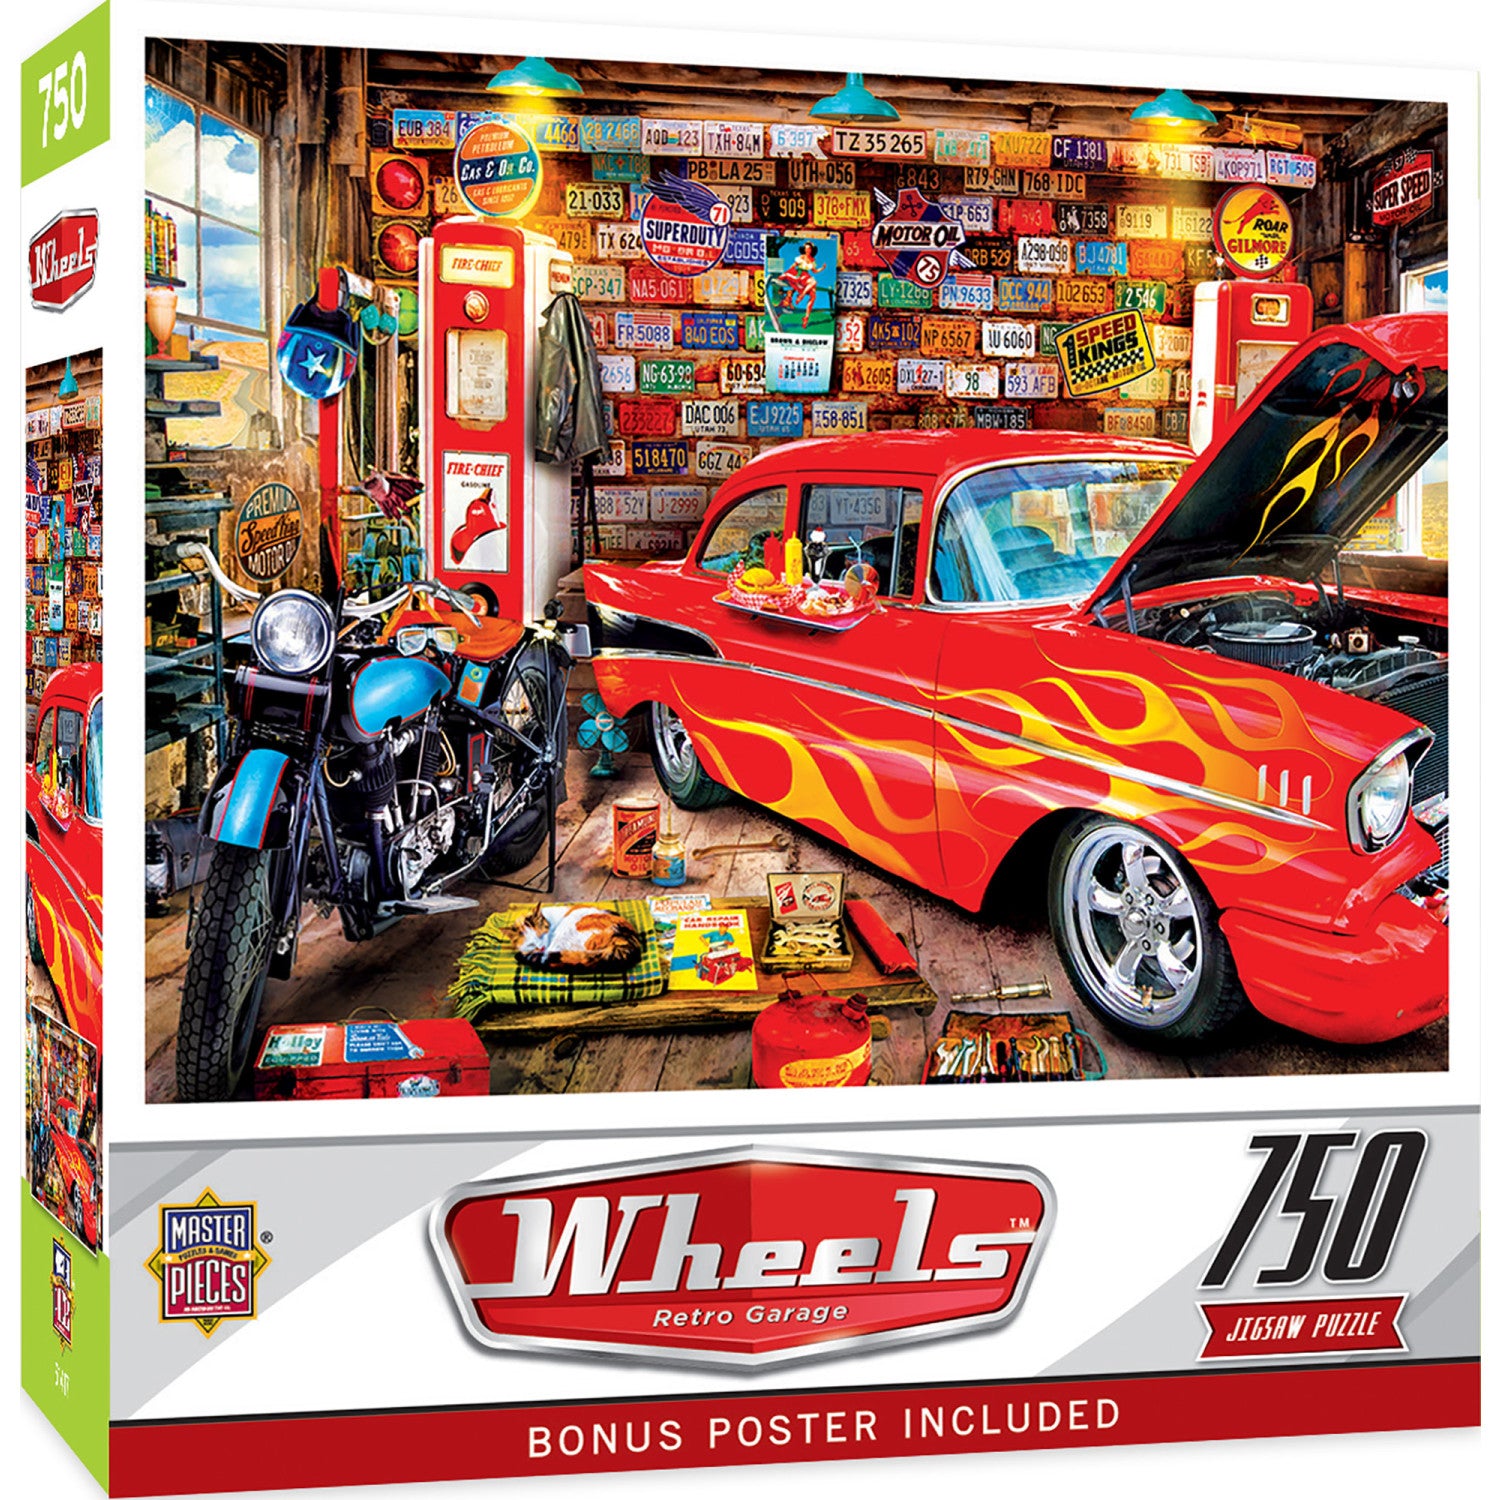 Wheels - Retro Garage 750 Piece Jigsaw Puzzle